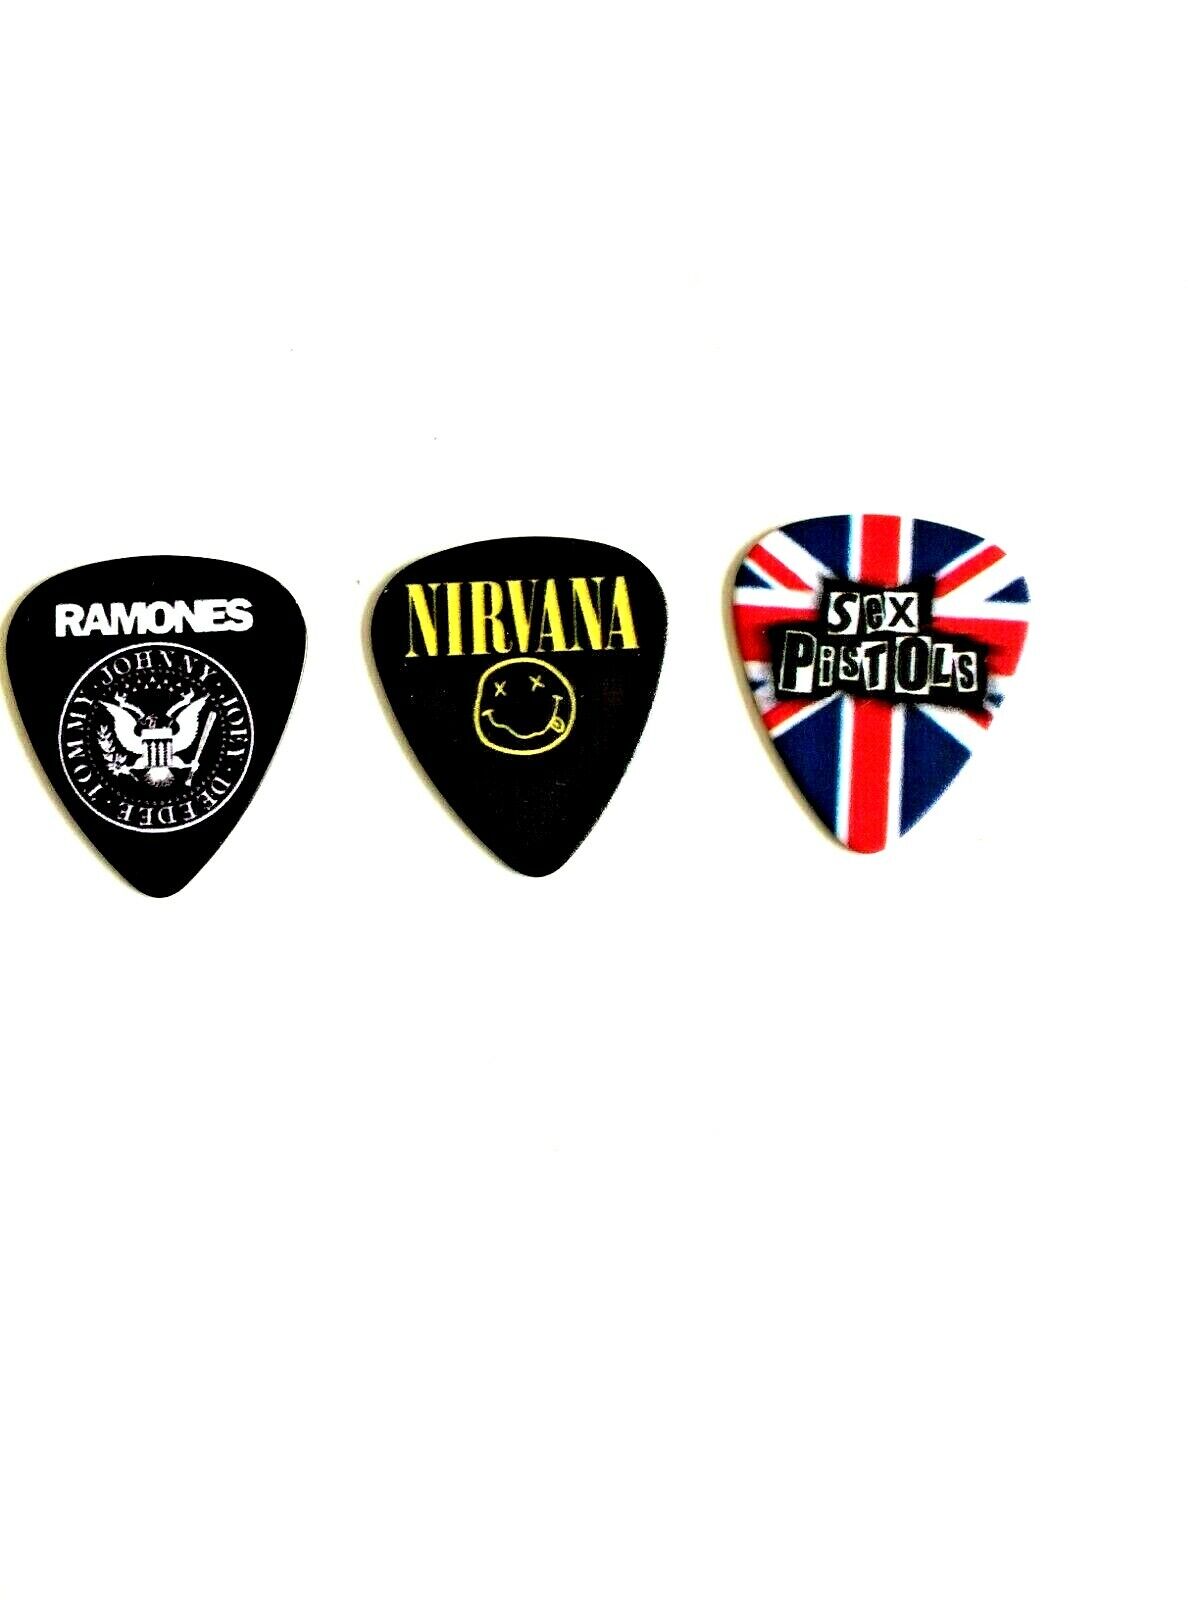 Sex Pistols Ramones Nirvana Set 0f 3 Guitar Picks NEW Never Used USA Shipper Без бренда